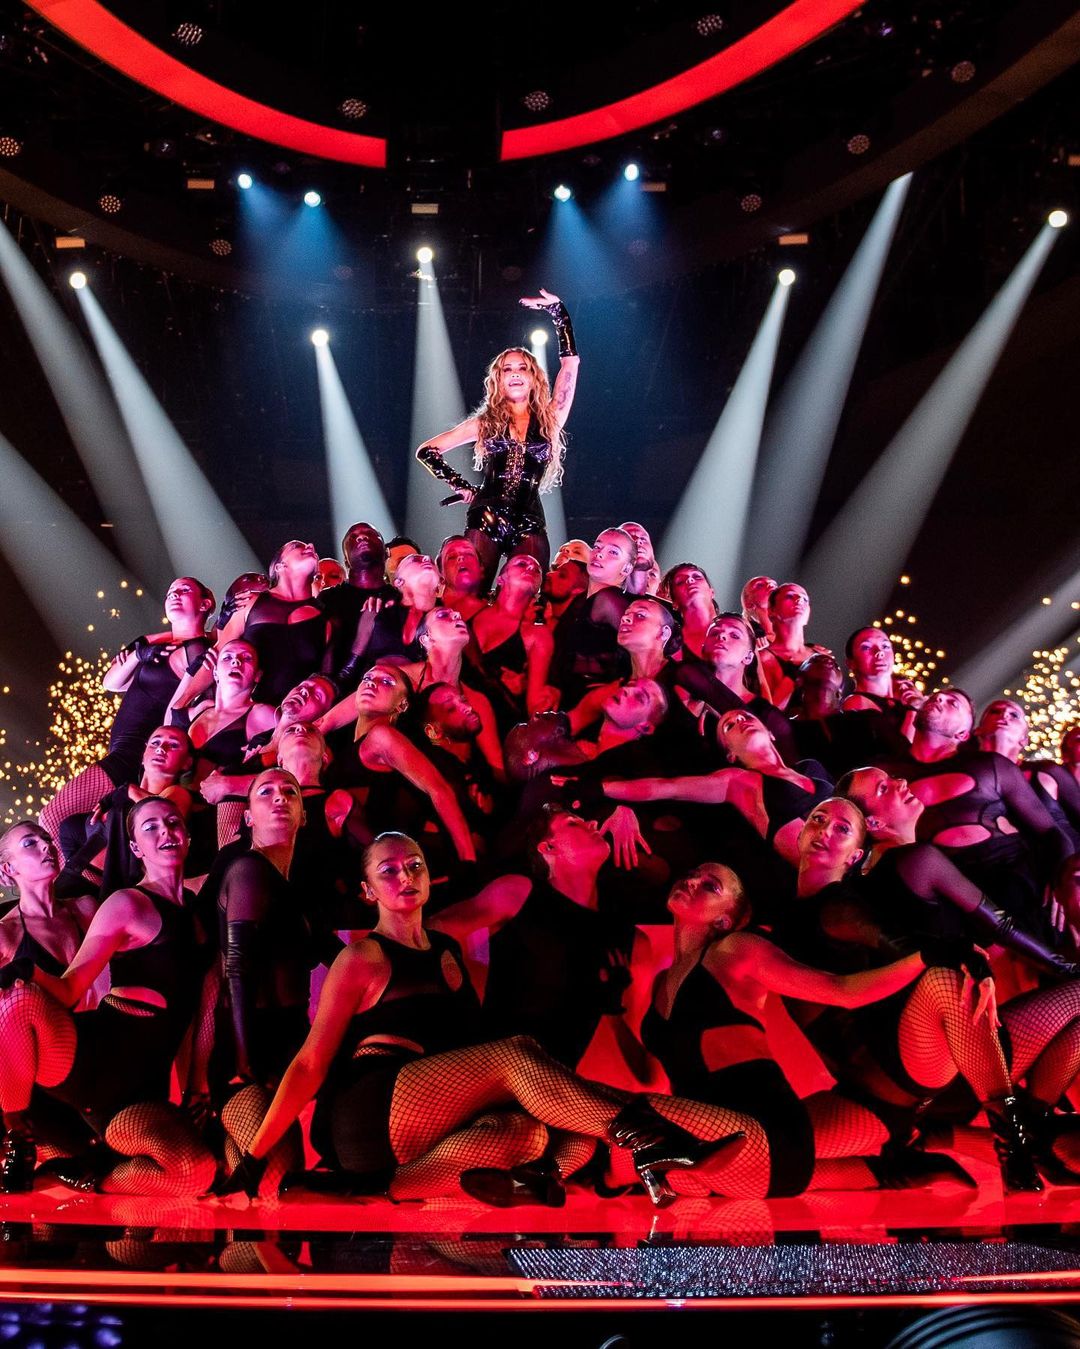 FOTOS Rita Ora en vivo en Eurovisin! - Photo 2